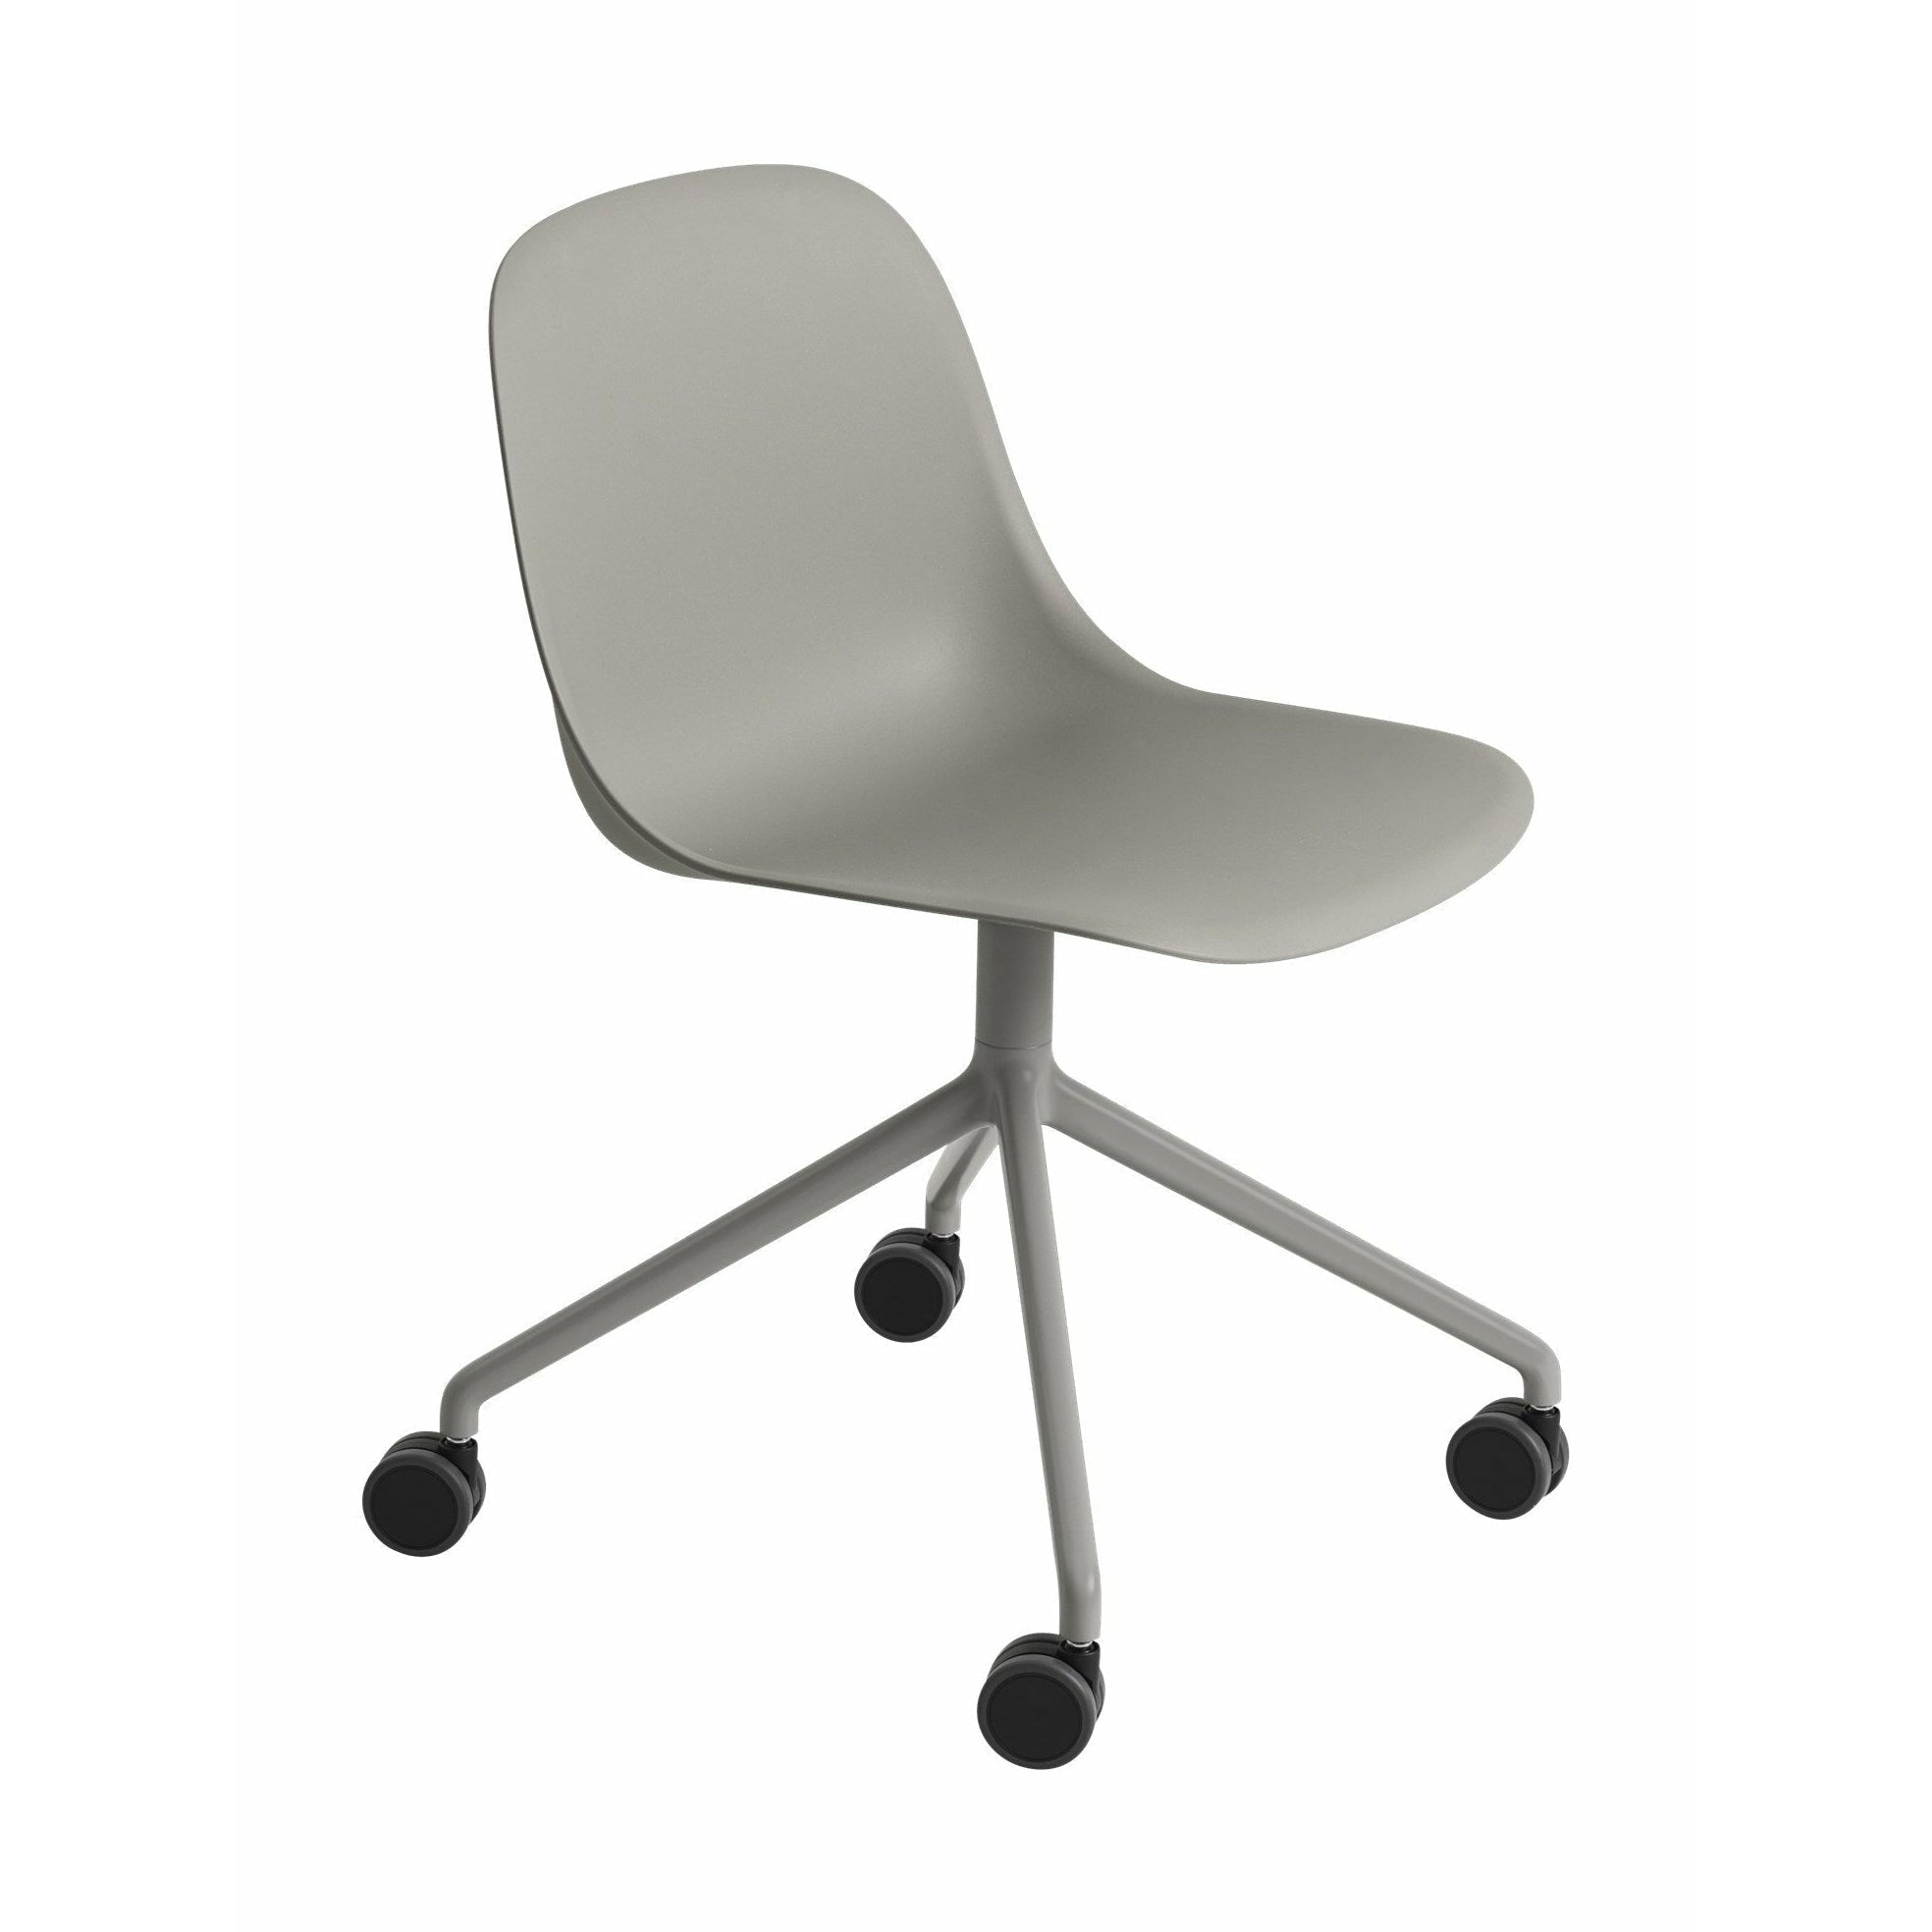 Muuto Fiber Side Chair aus recyceltem Kunststoff, drehbar mit Rädern, grau/grau